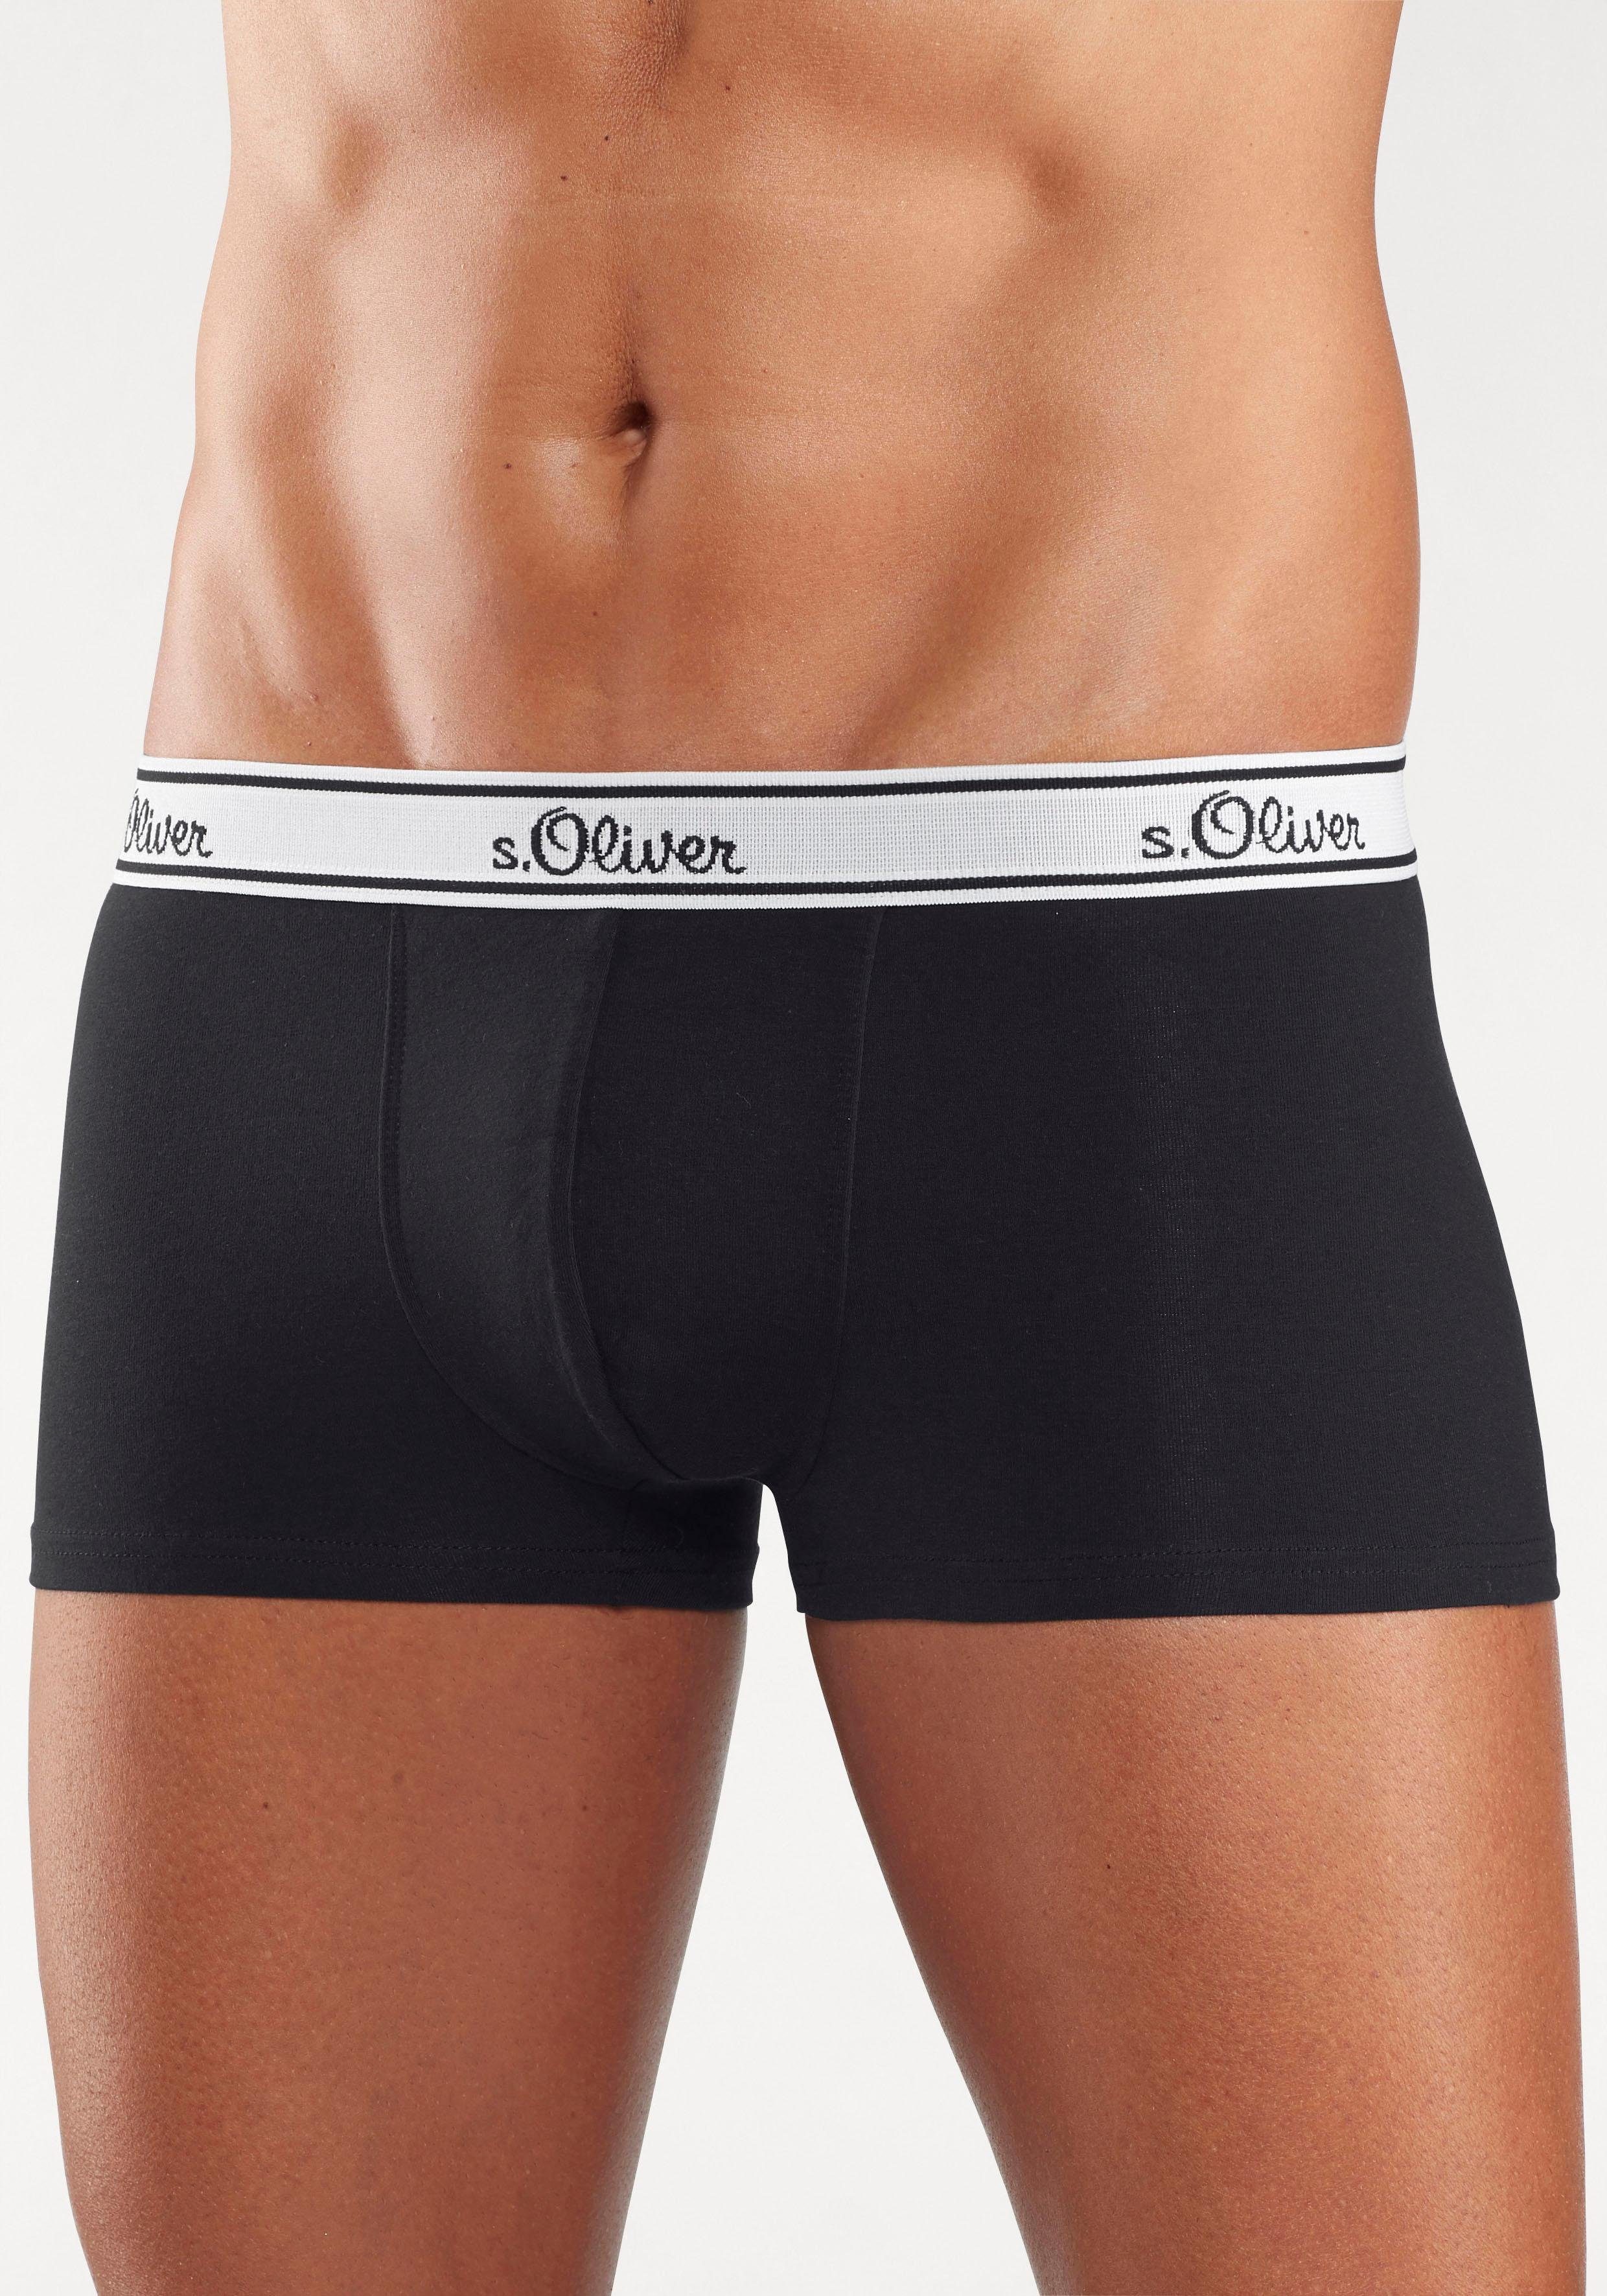 s.Oliver Boxershorts (Packung, schöne schwarz Pants Hipster-Form Retro in 3-St)